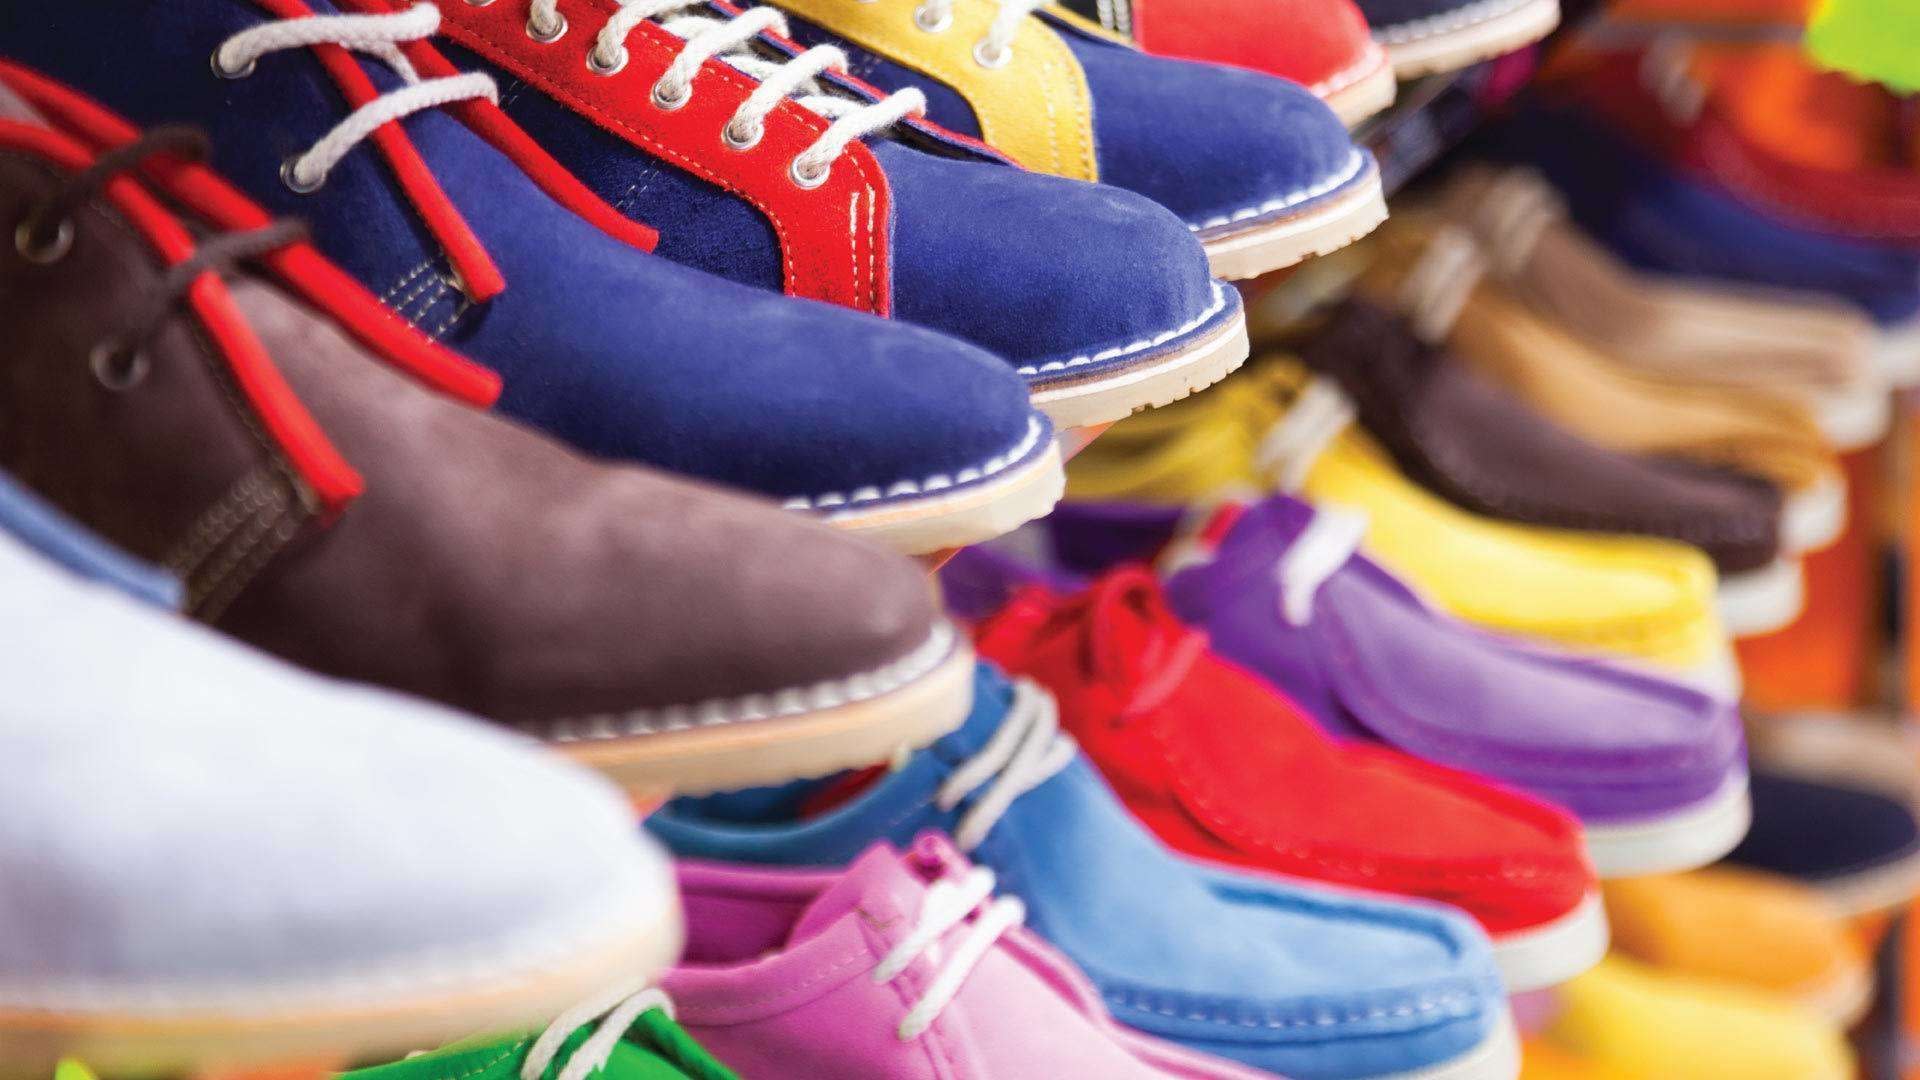 Top 20 Best Shoe Sites Ranked 2021